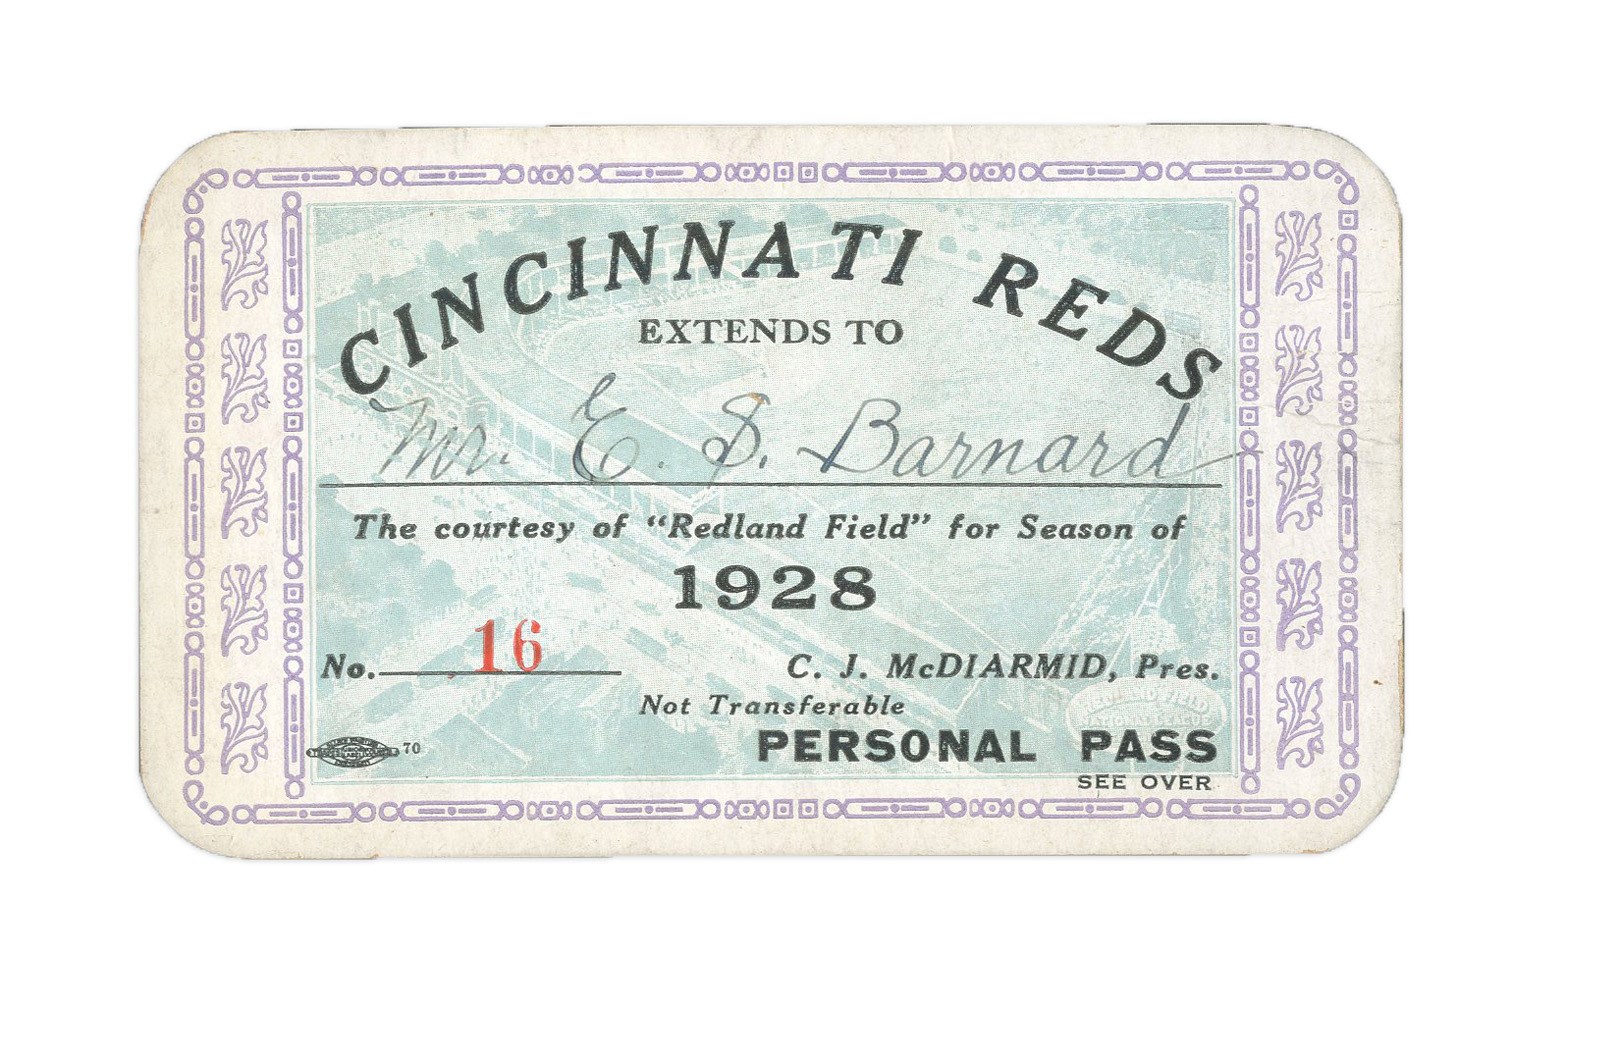 1928 Cincinnati Reds Pass Presented to President Ernest Barnard